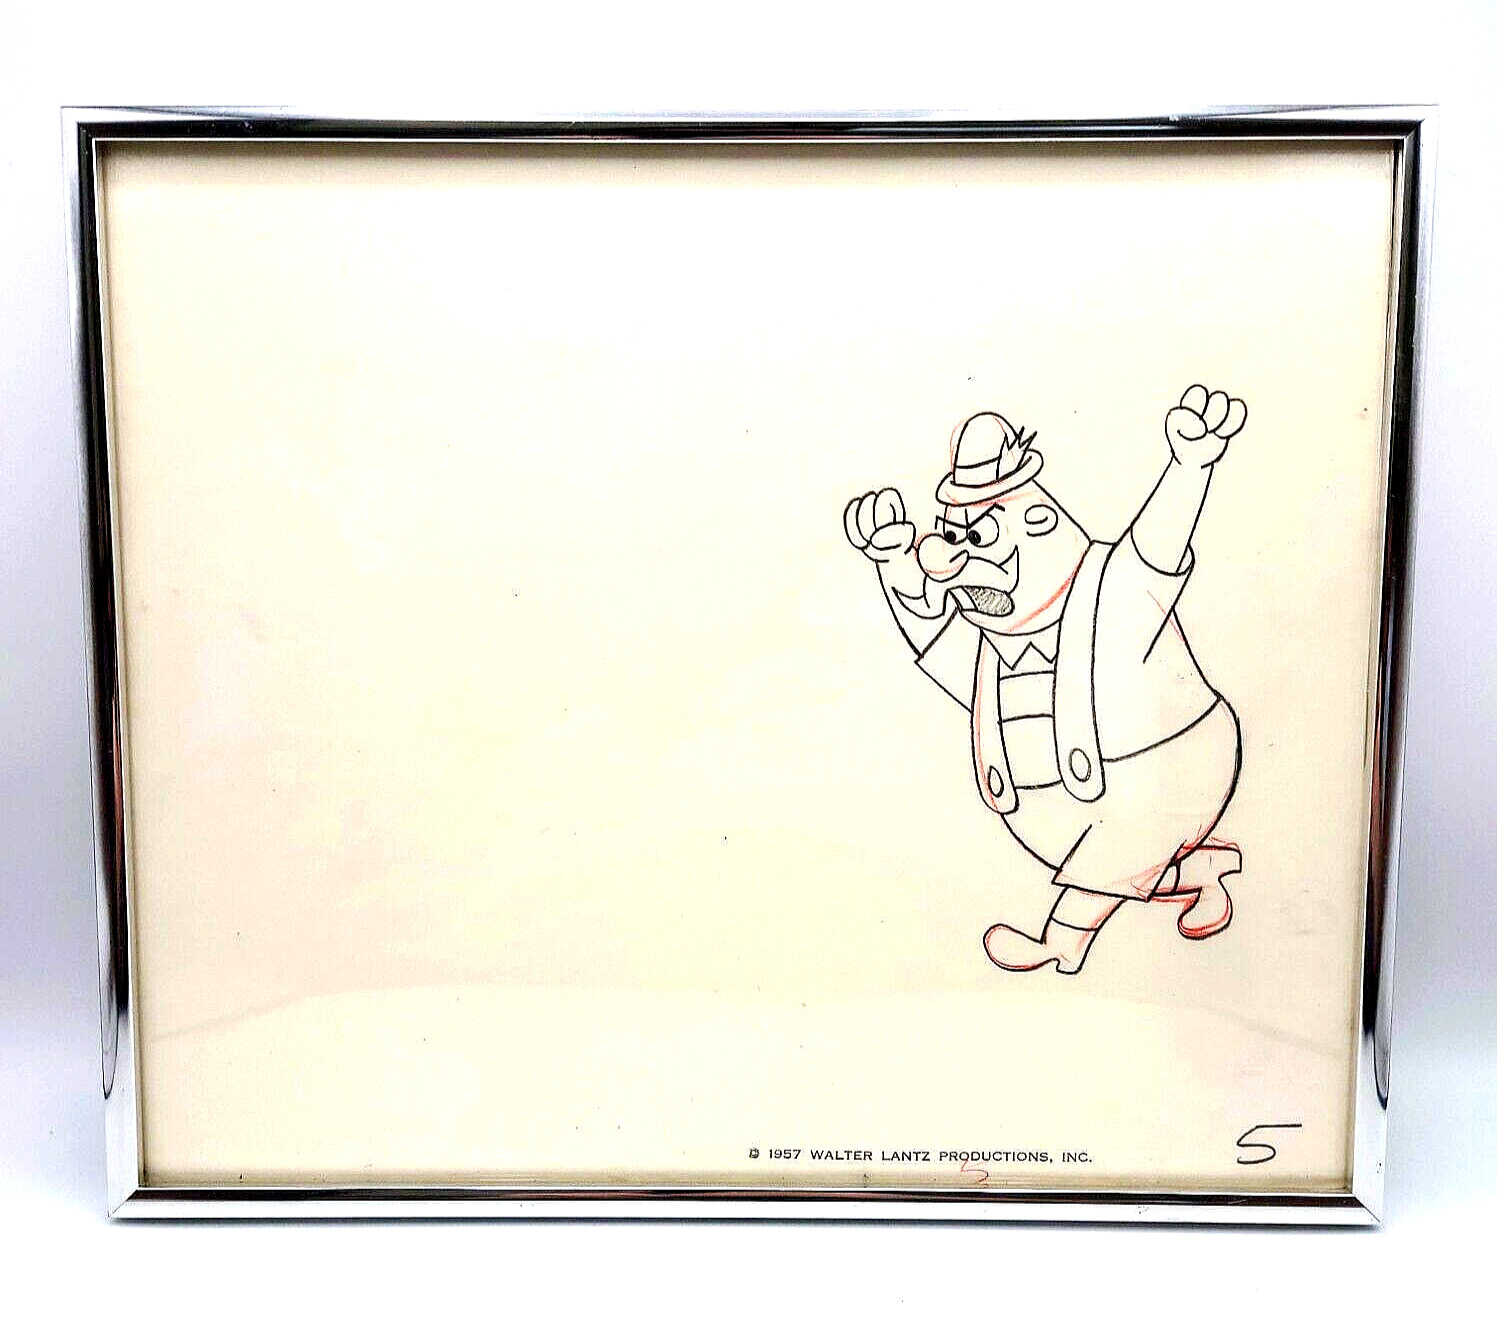 1957 Original Walter Lantz Framed Production Drawing Woody Wood Pecker Character